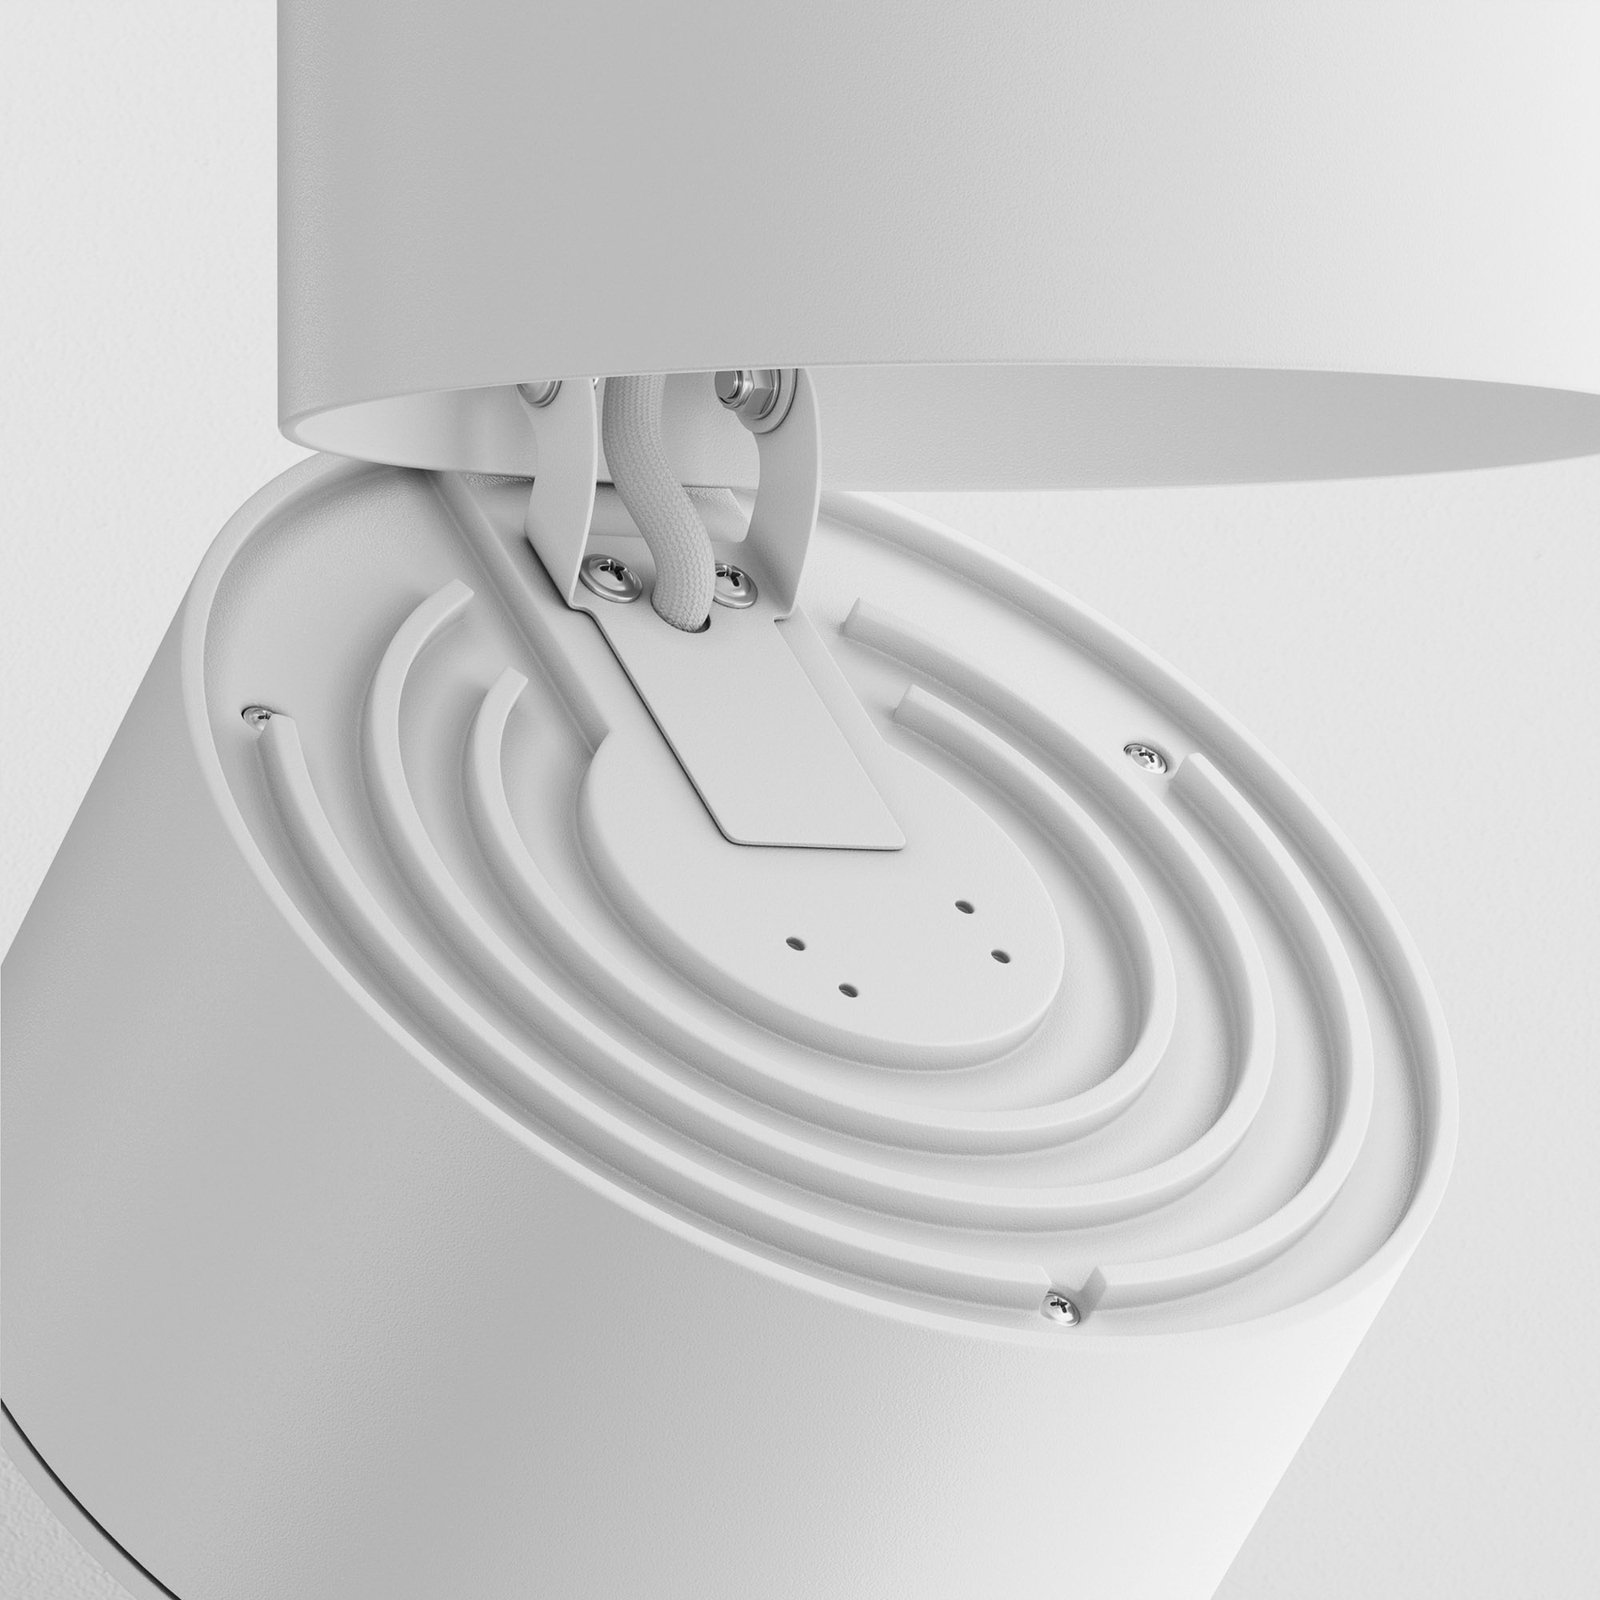 Maytoni Yin LED-Strahler Unity-System, Triac, 930, weiß